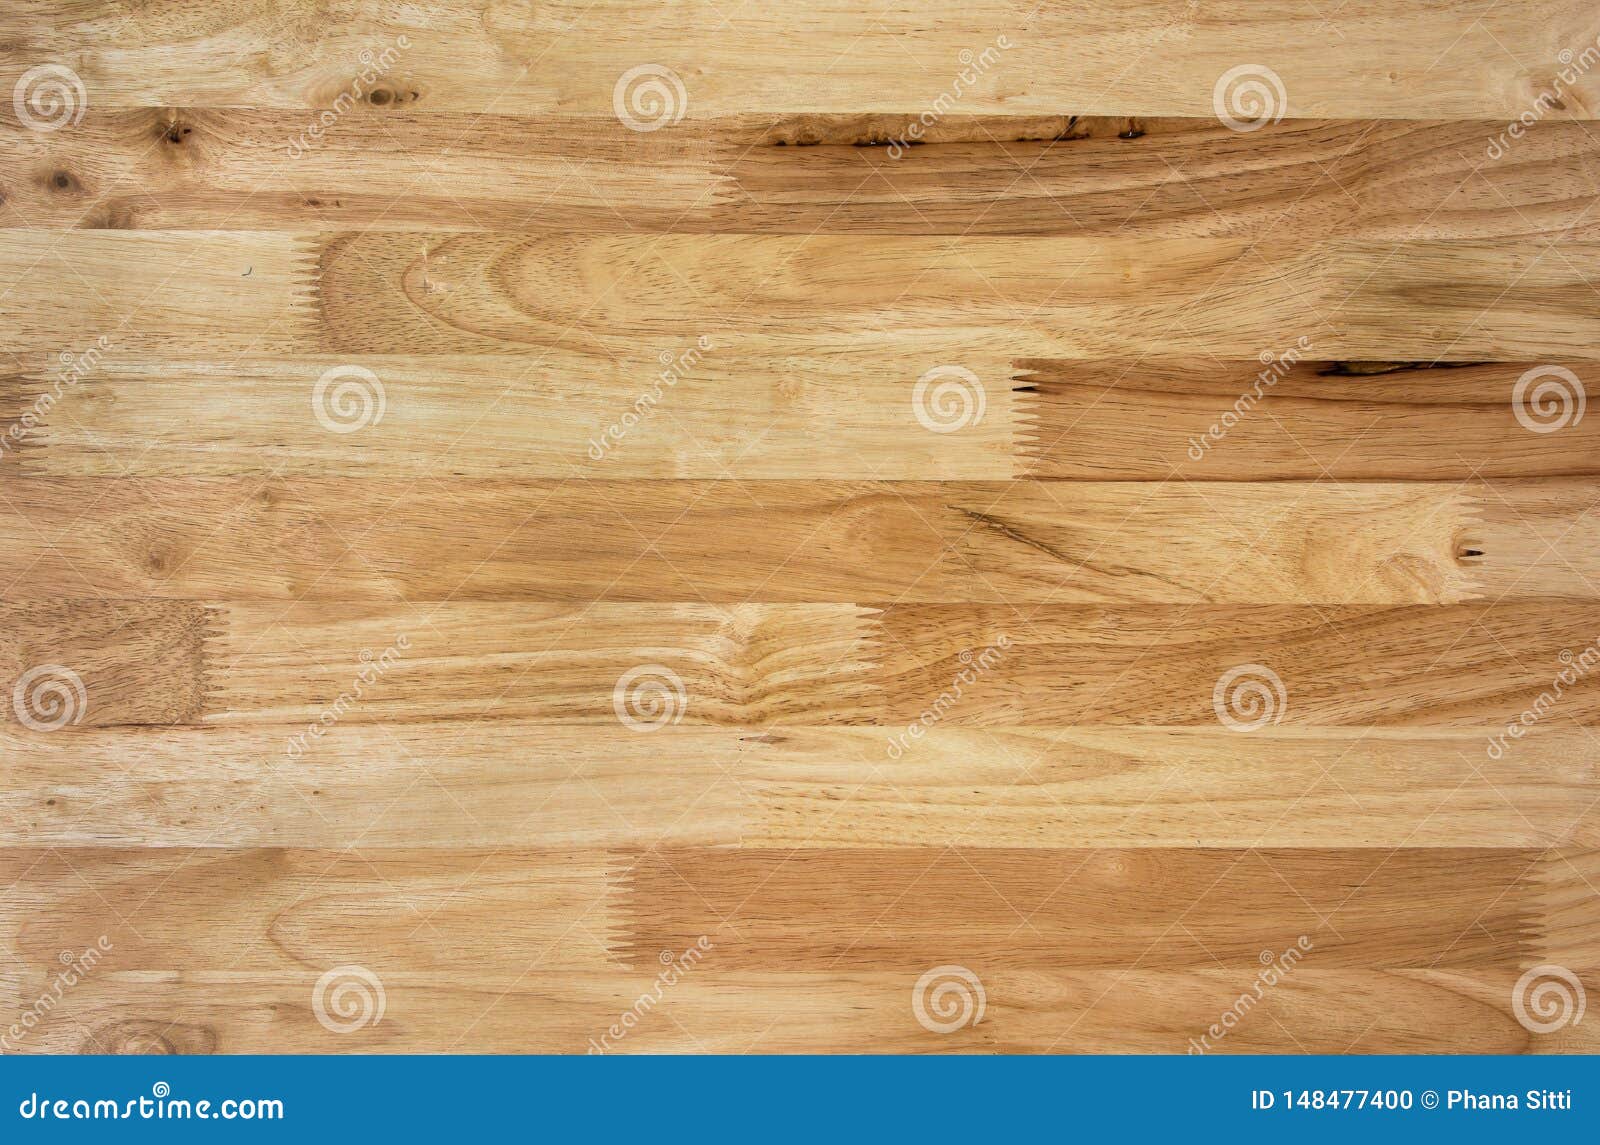 Basketball court wood floor background texture Stock Photo